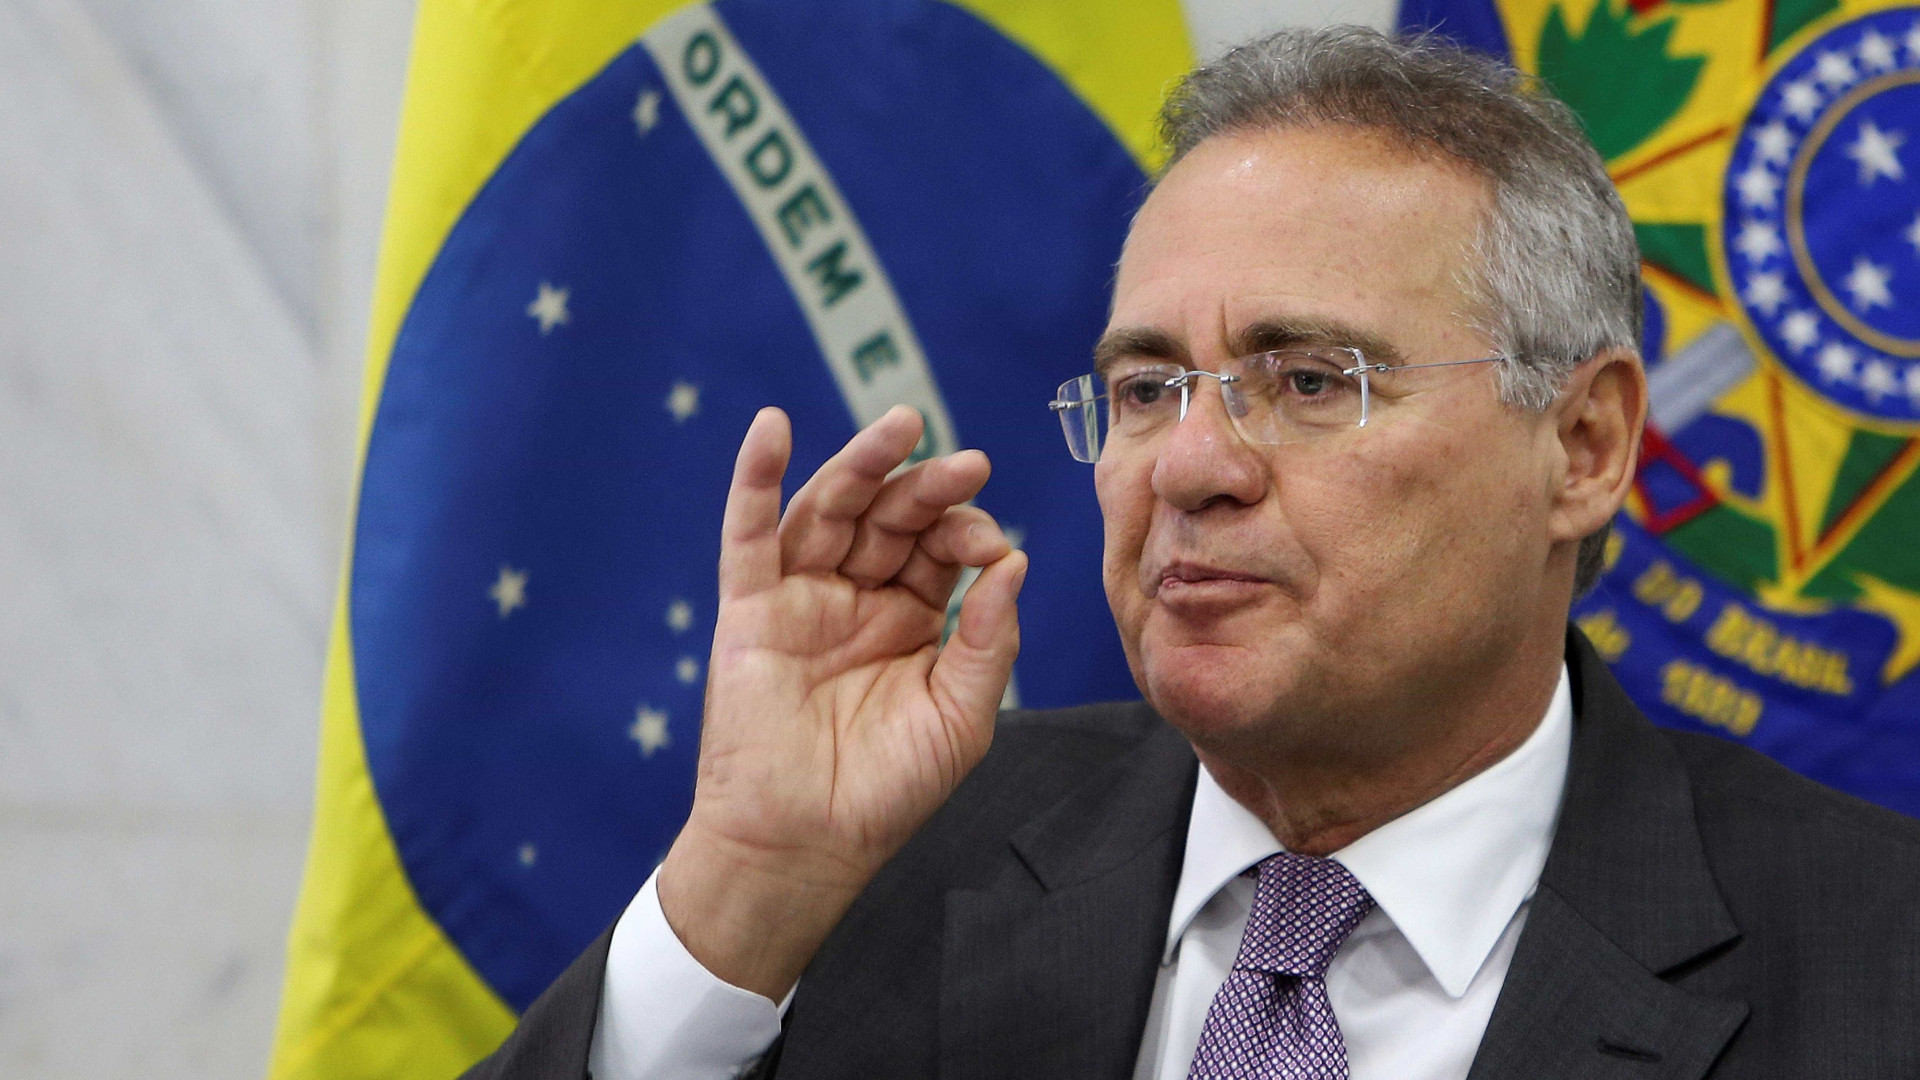 Renan promete acionar Conselho do Ministério Público contra Dallagnol